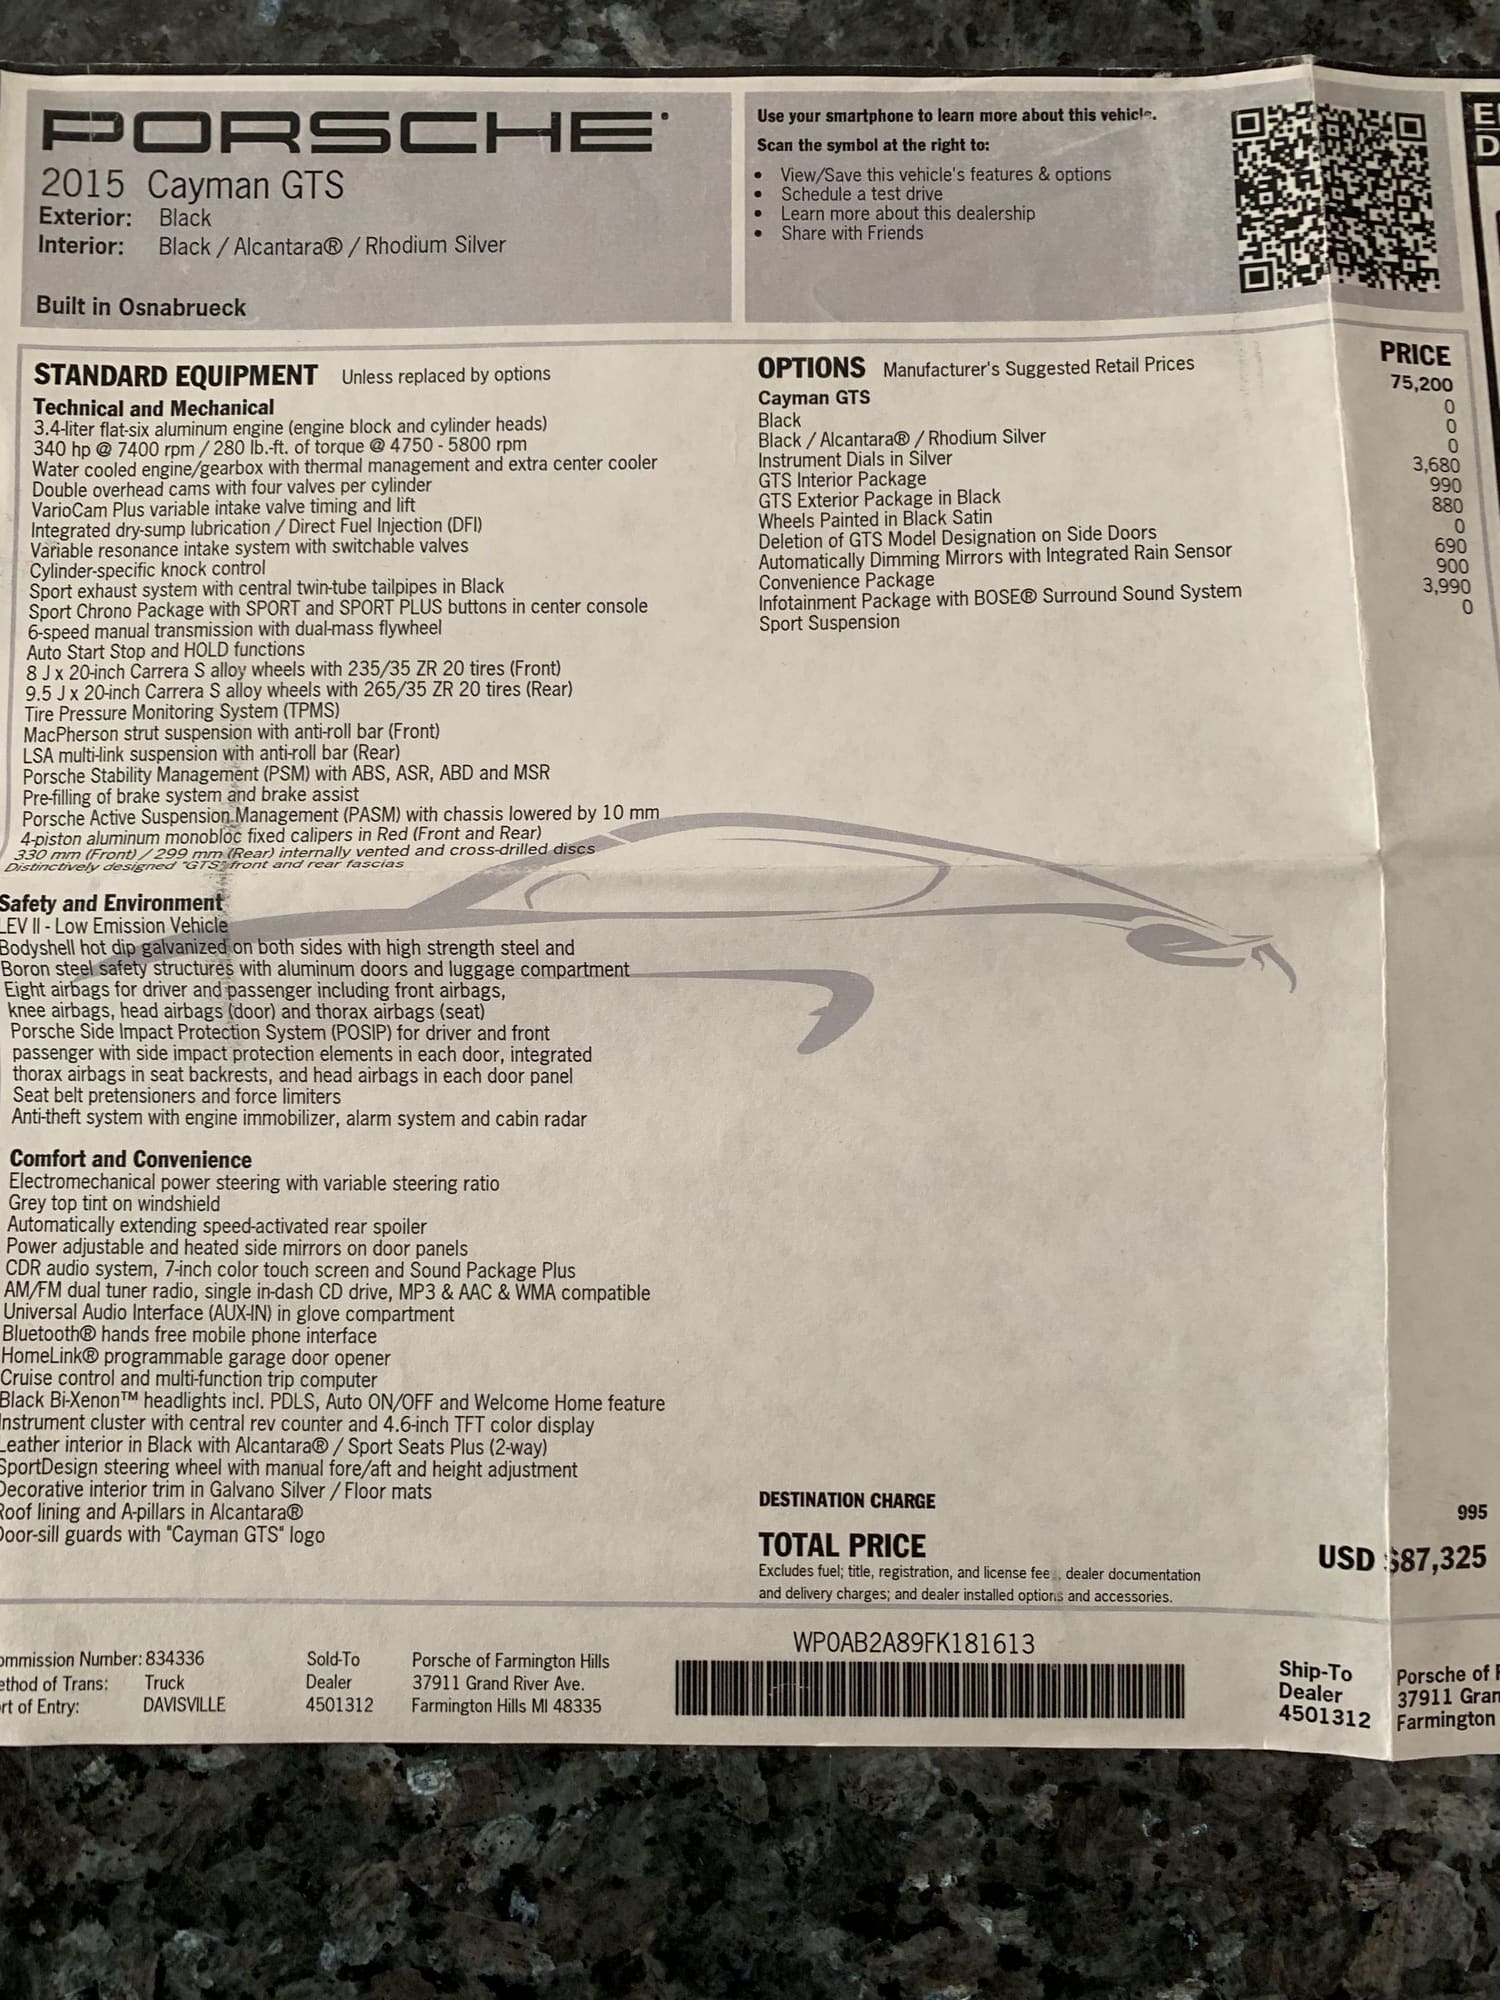 2015 Porsche Cayman - 2015 Porsche Cayman GTS 6 speed Manual - Used - VIN WP0AB2A89FK181613 - 31,000 Miles - 6 cyl - 2WD - Manual - Coupe - Black - Novi, MI 48375, United States